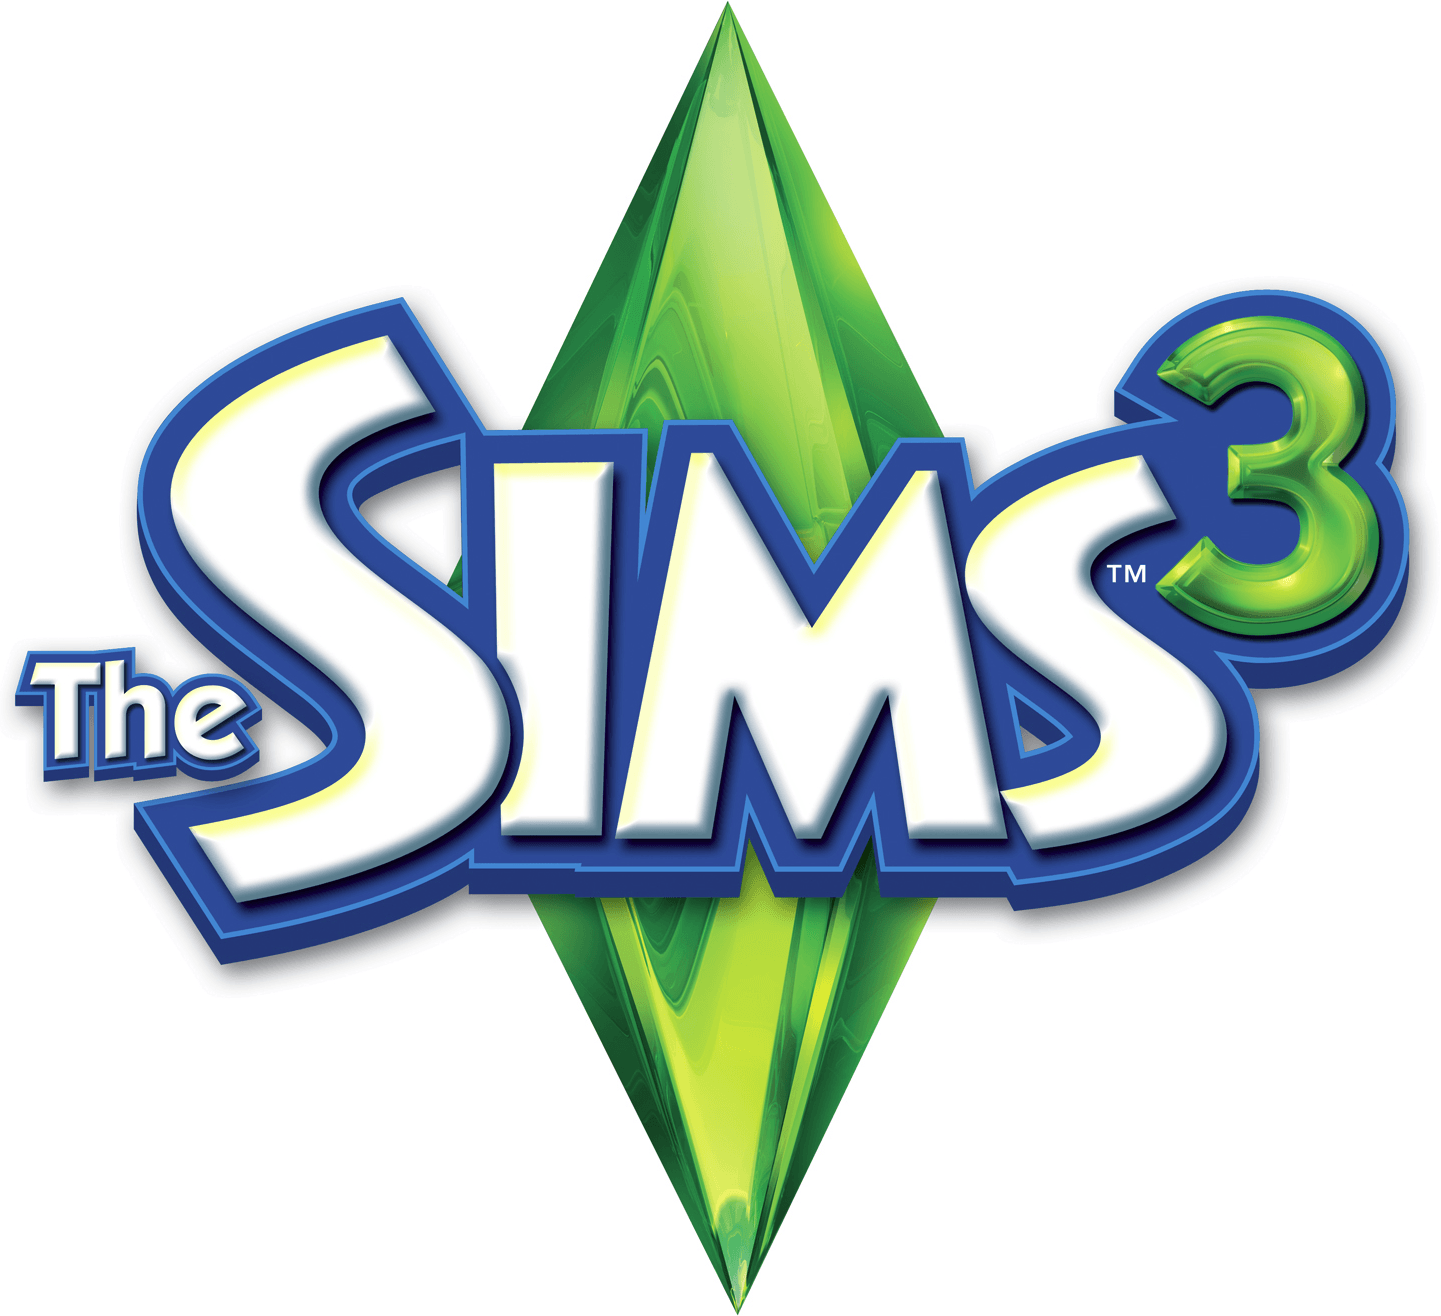 Sims 3 Logo - The Sims 3 | Logopedia | FANDOM powered by Wikia